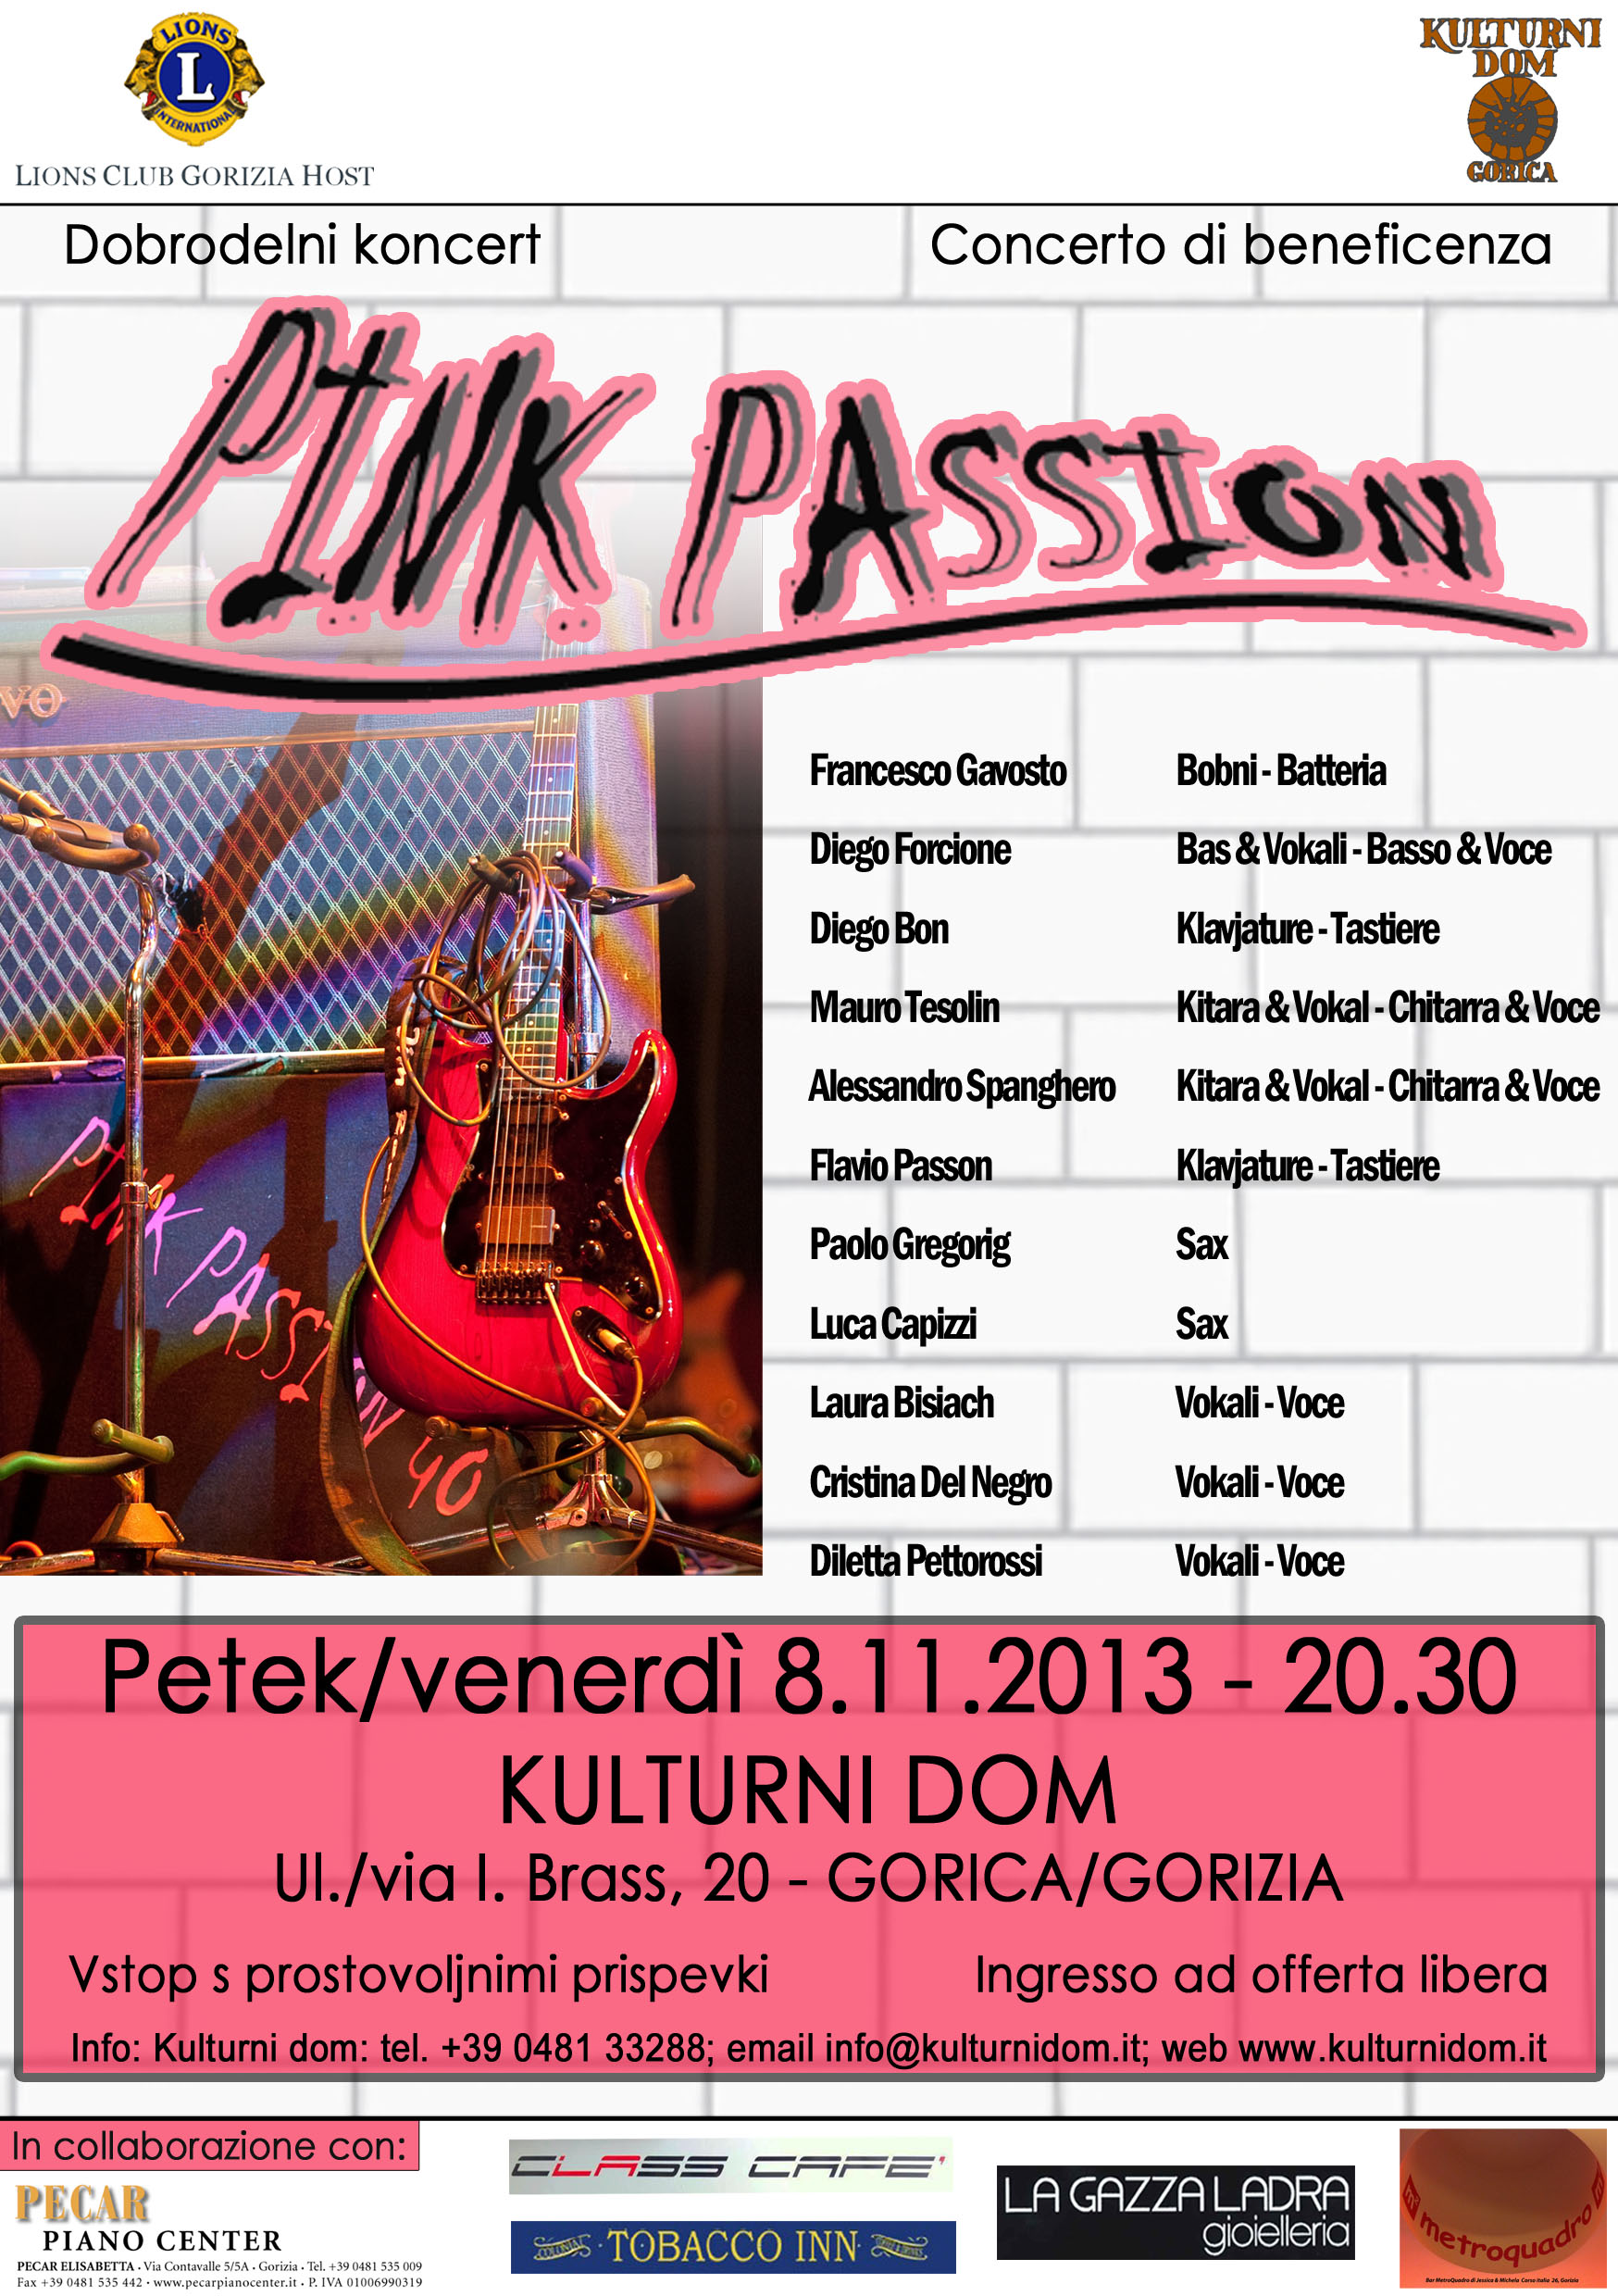 Pink Passion